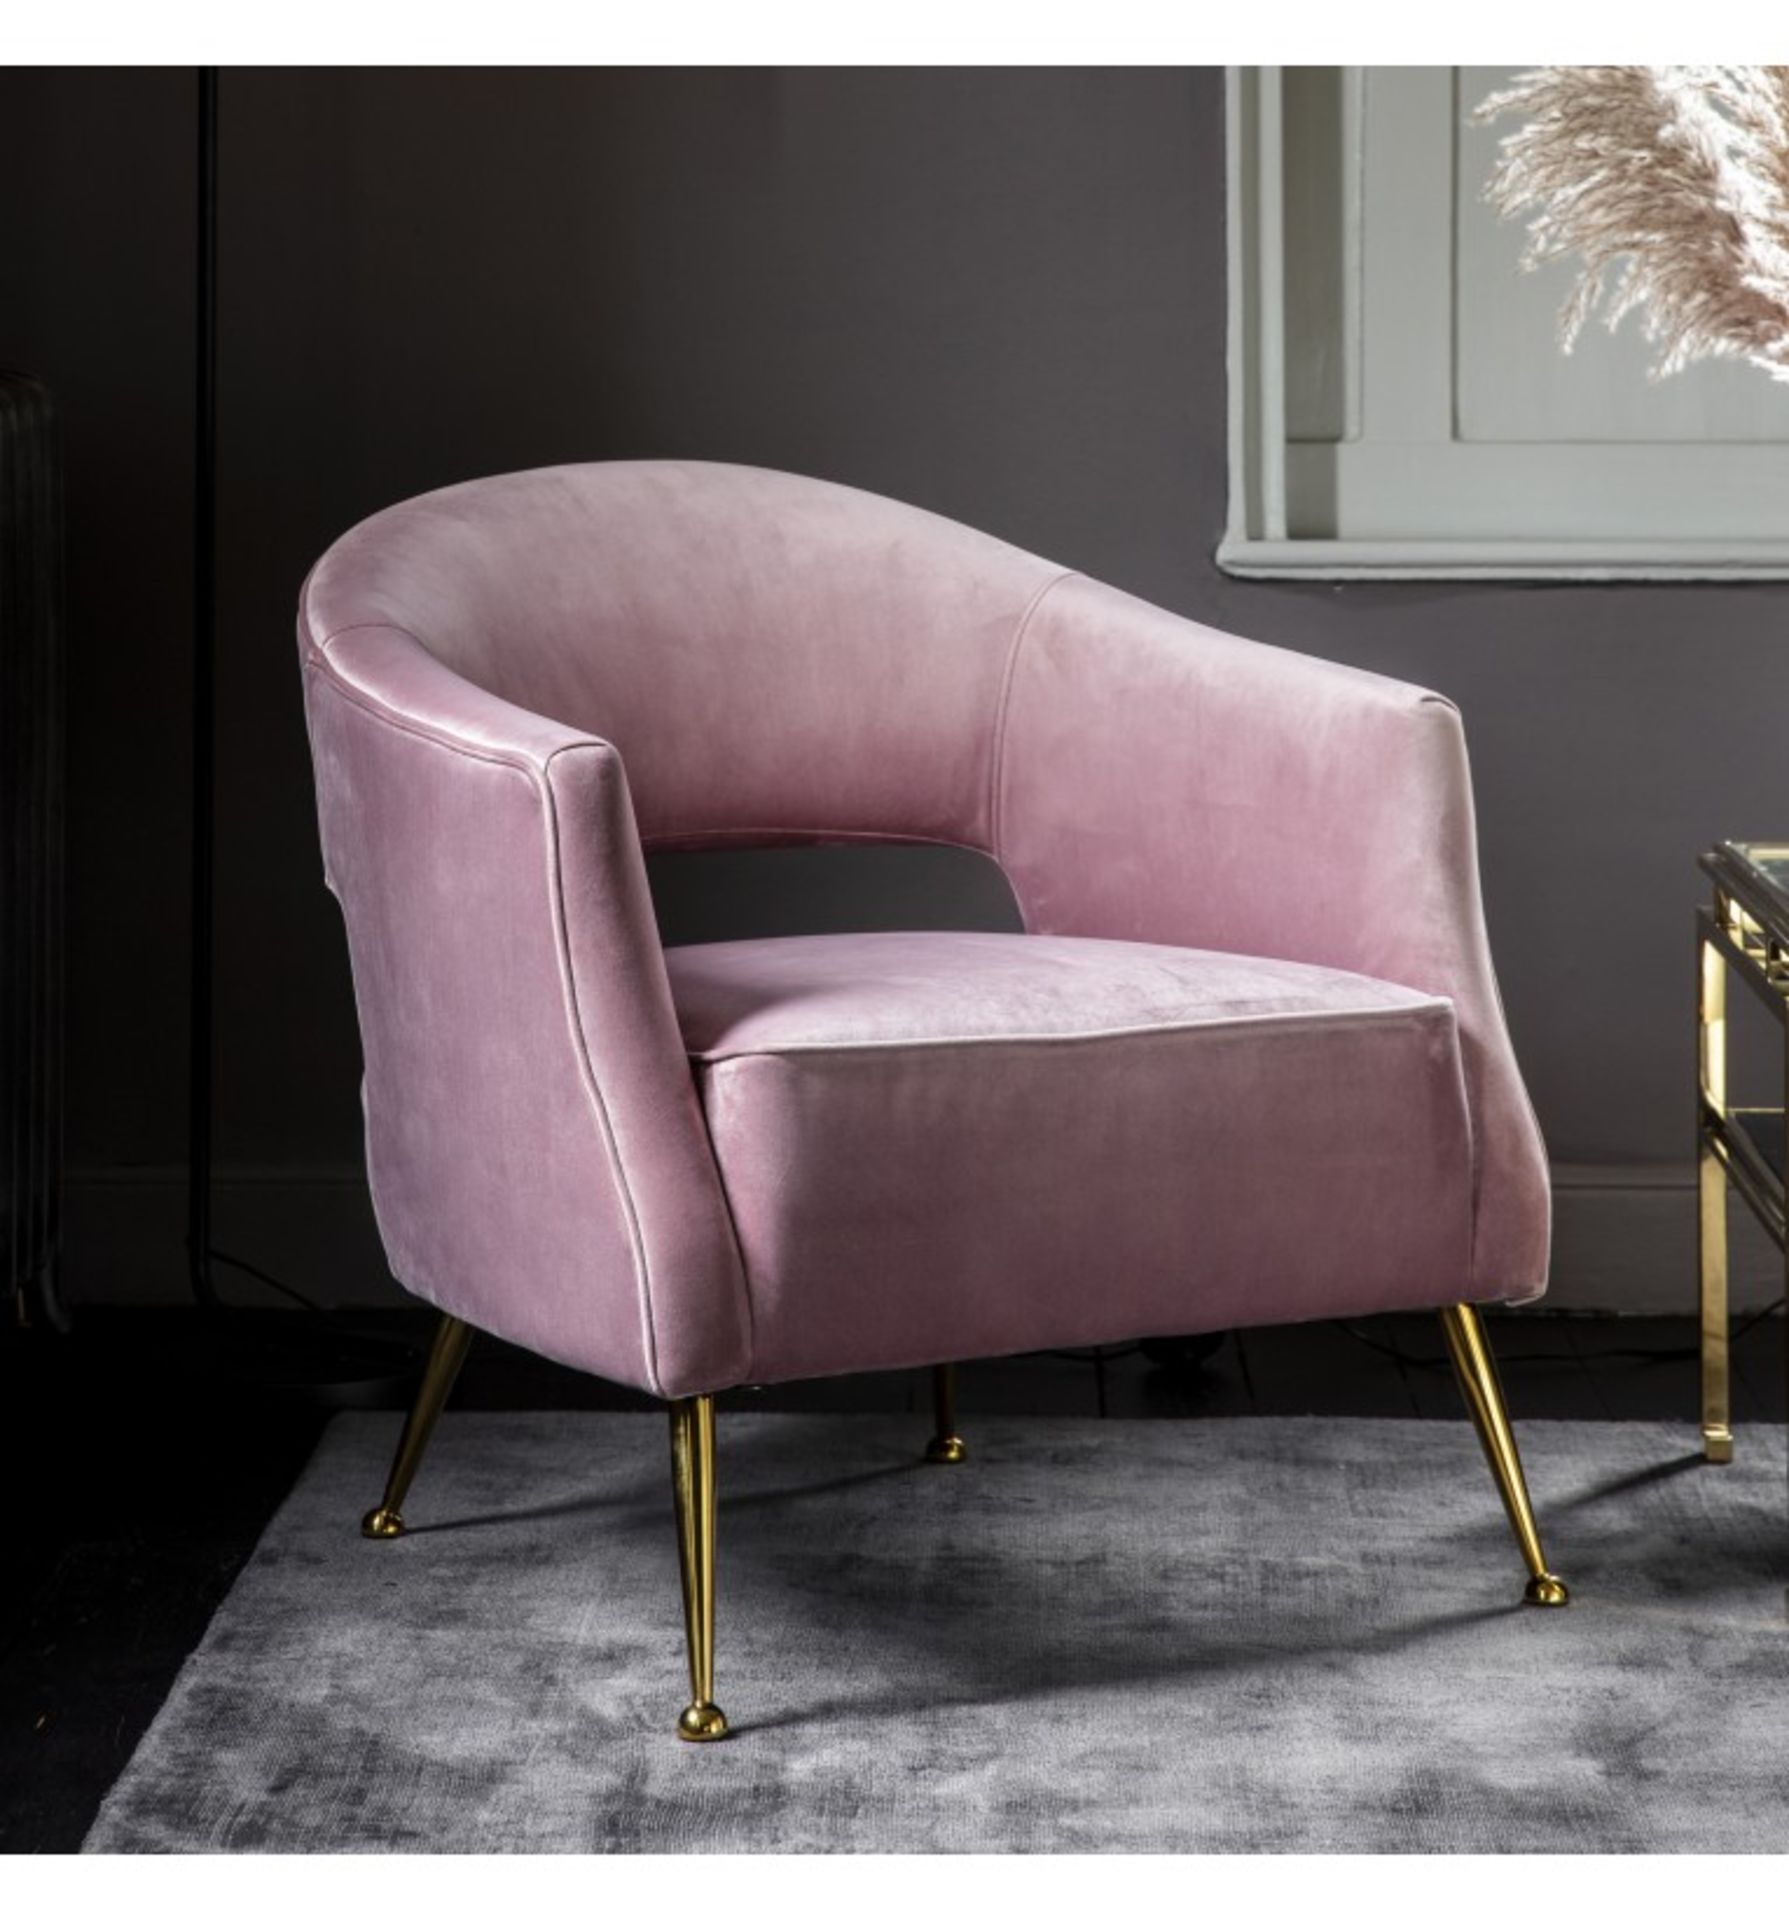 Barletta Armchair Dusky Velvet 750x730x750mm Contemporary arm chair perfect for adding style and